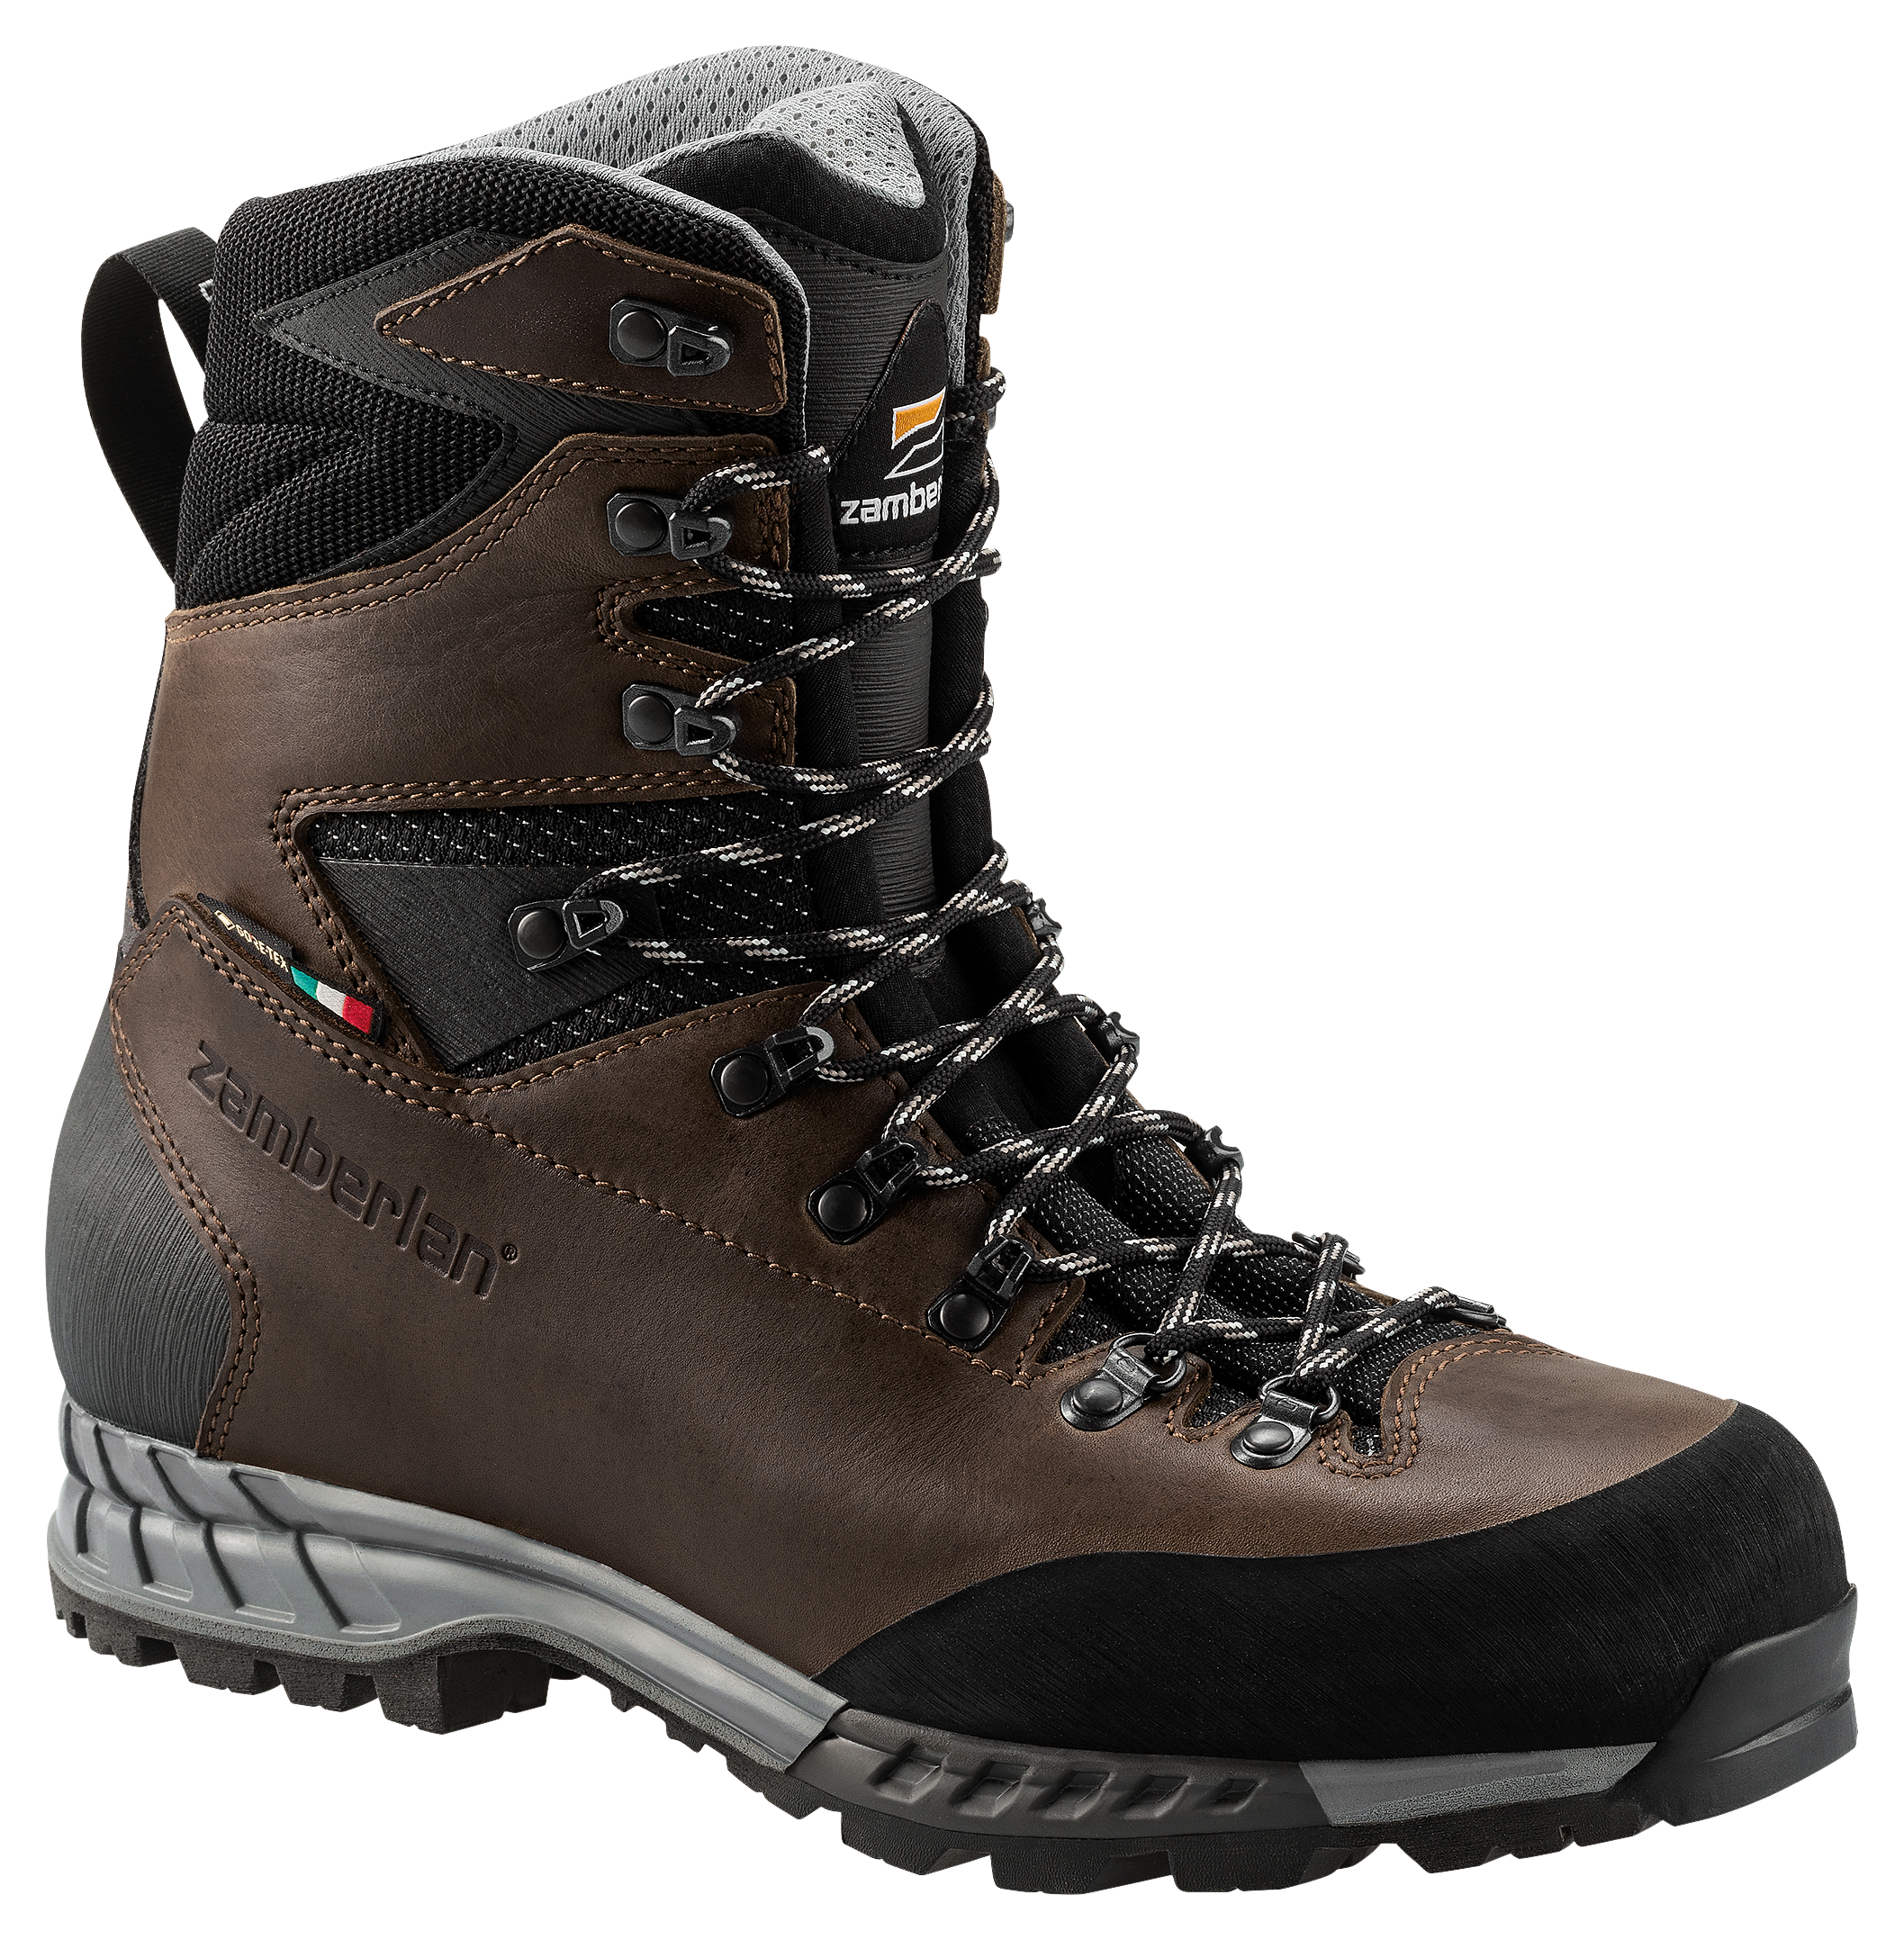 Zamberlan Cresta Alta GTX RR Hunting Boots for Men - Waxed Dark Brown - 10.5M